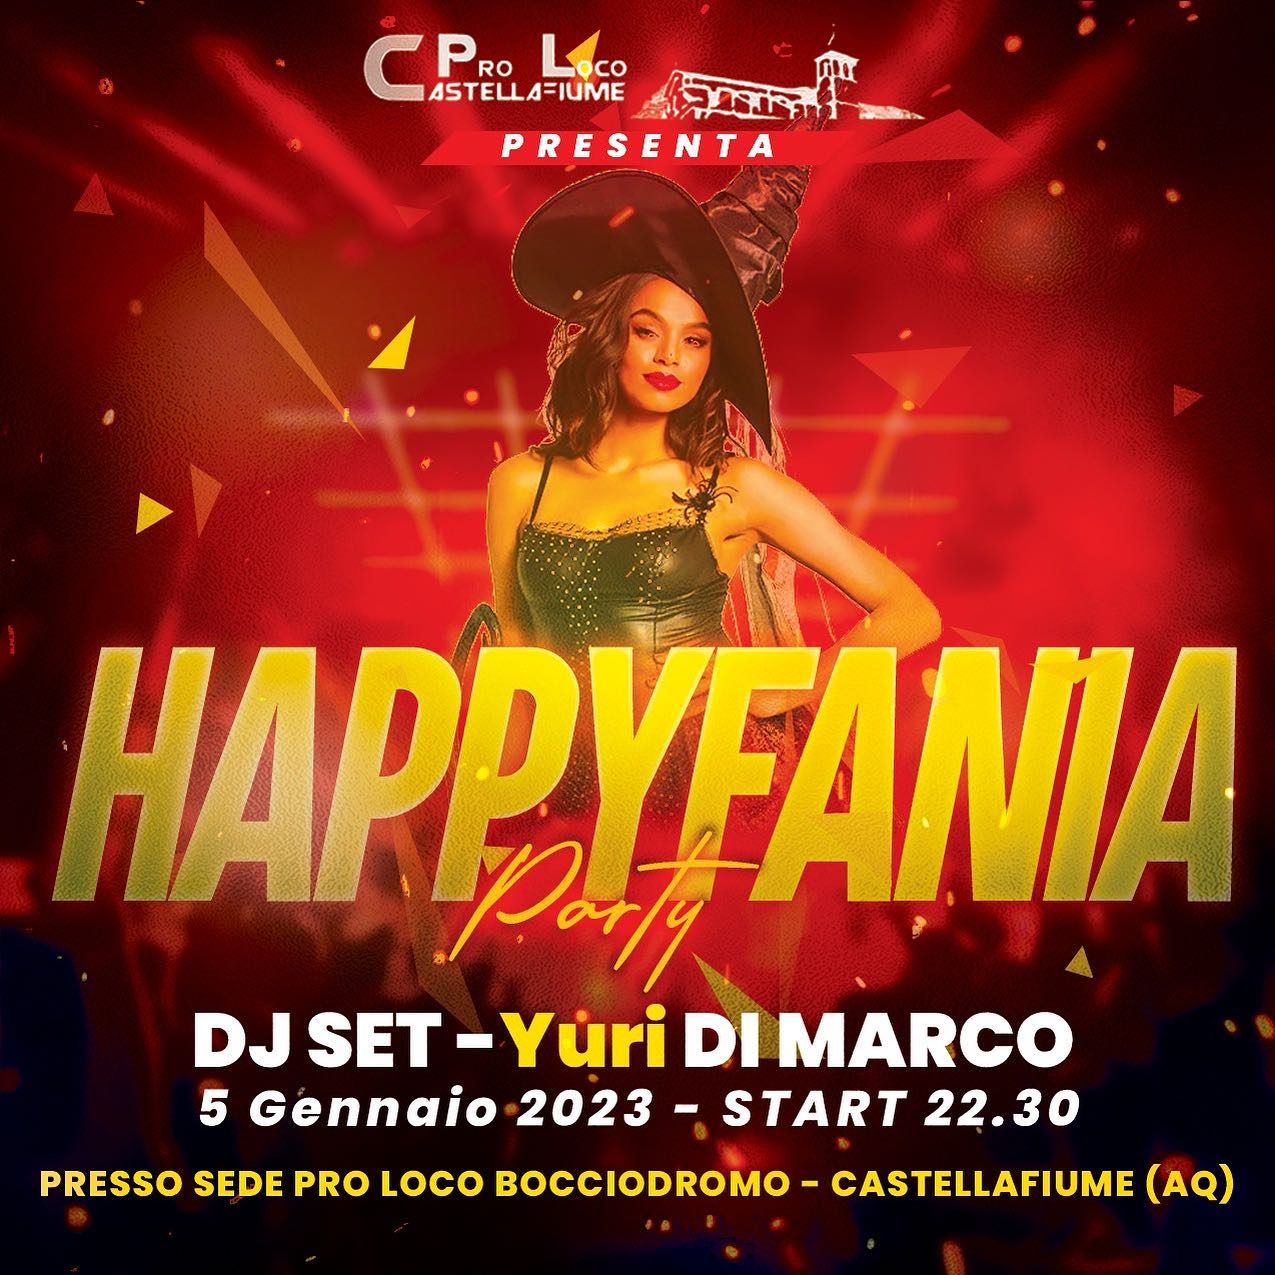 HAPPYFANIA party - 5 gennaio 2023 dalle 22:30 - Pro Loco Castellafiume